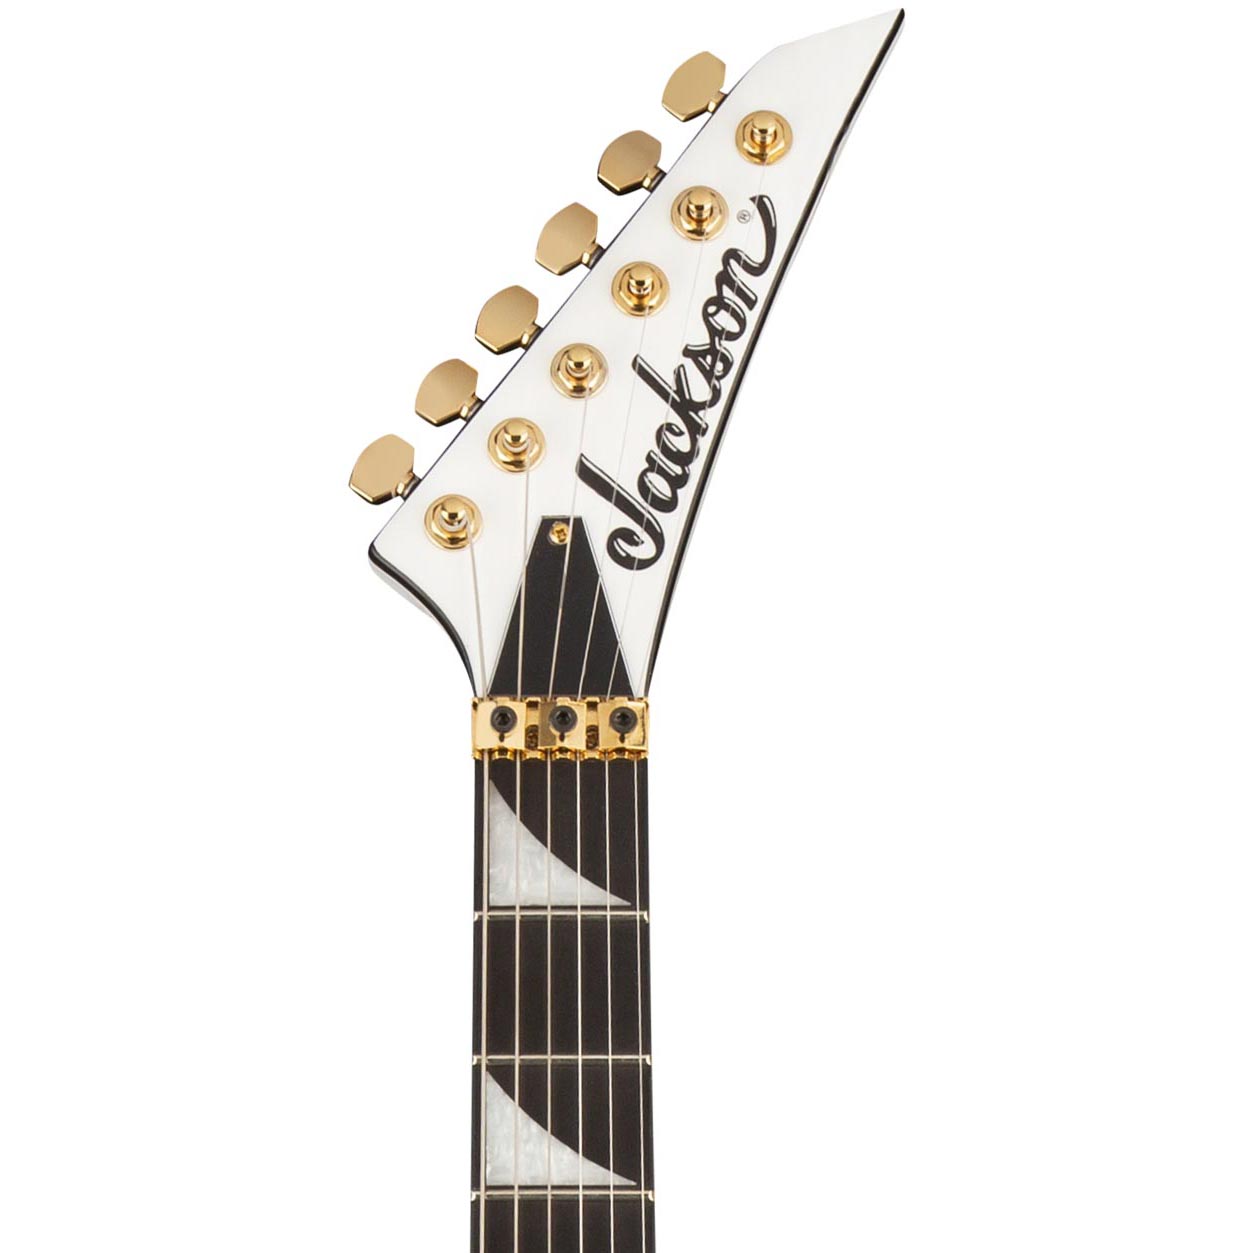 Jackson Concept Series Rhoads RR24 HS Electric Guitar, White w/ Black Pinstripes